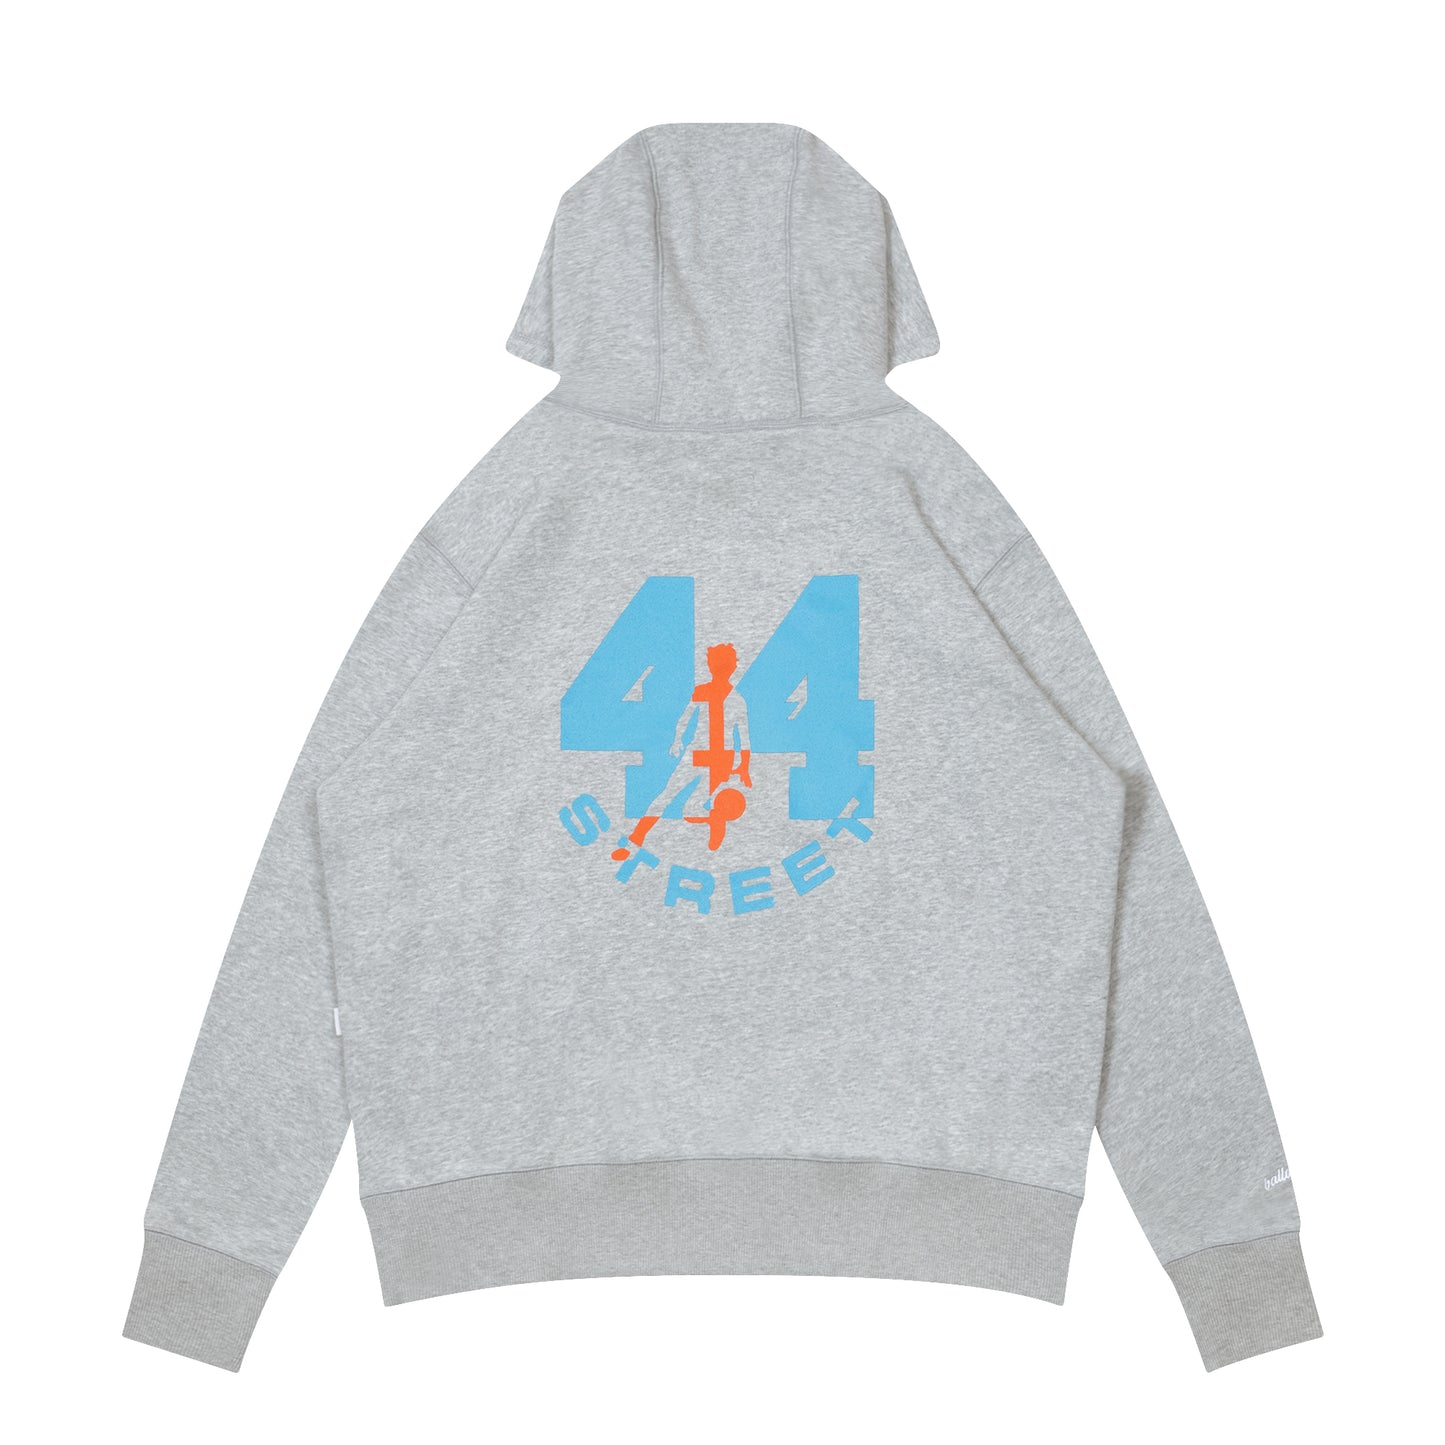 44 St. Sweat Hoodie (gray/light blue/orange)